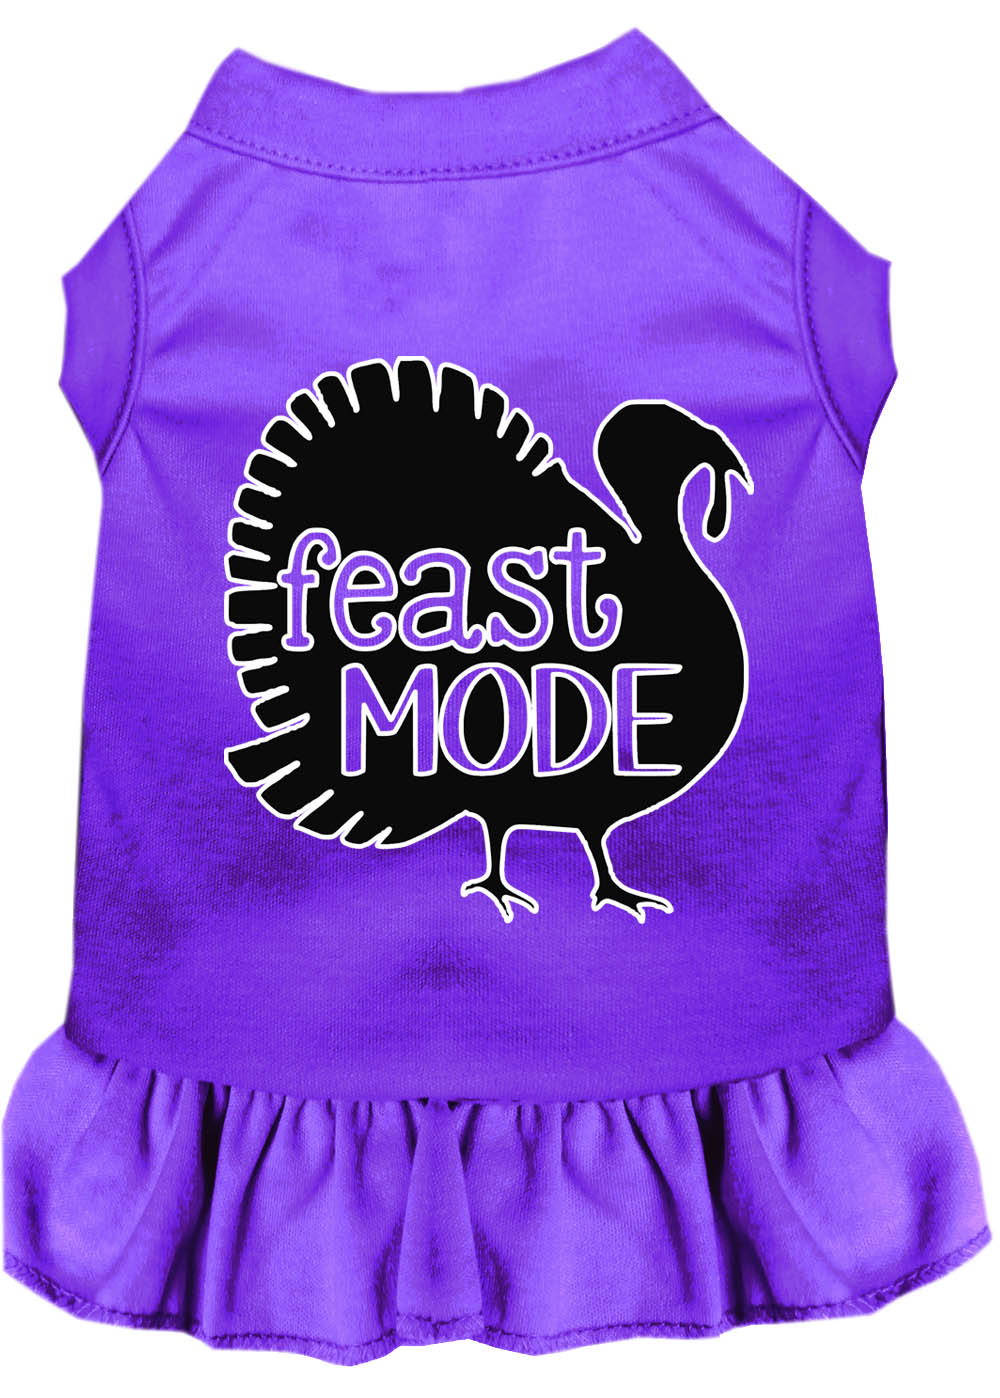 Feast Mode Screen Print Dog Dress Purple Lg